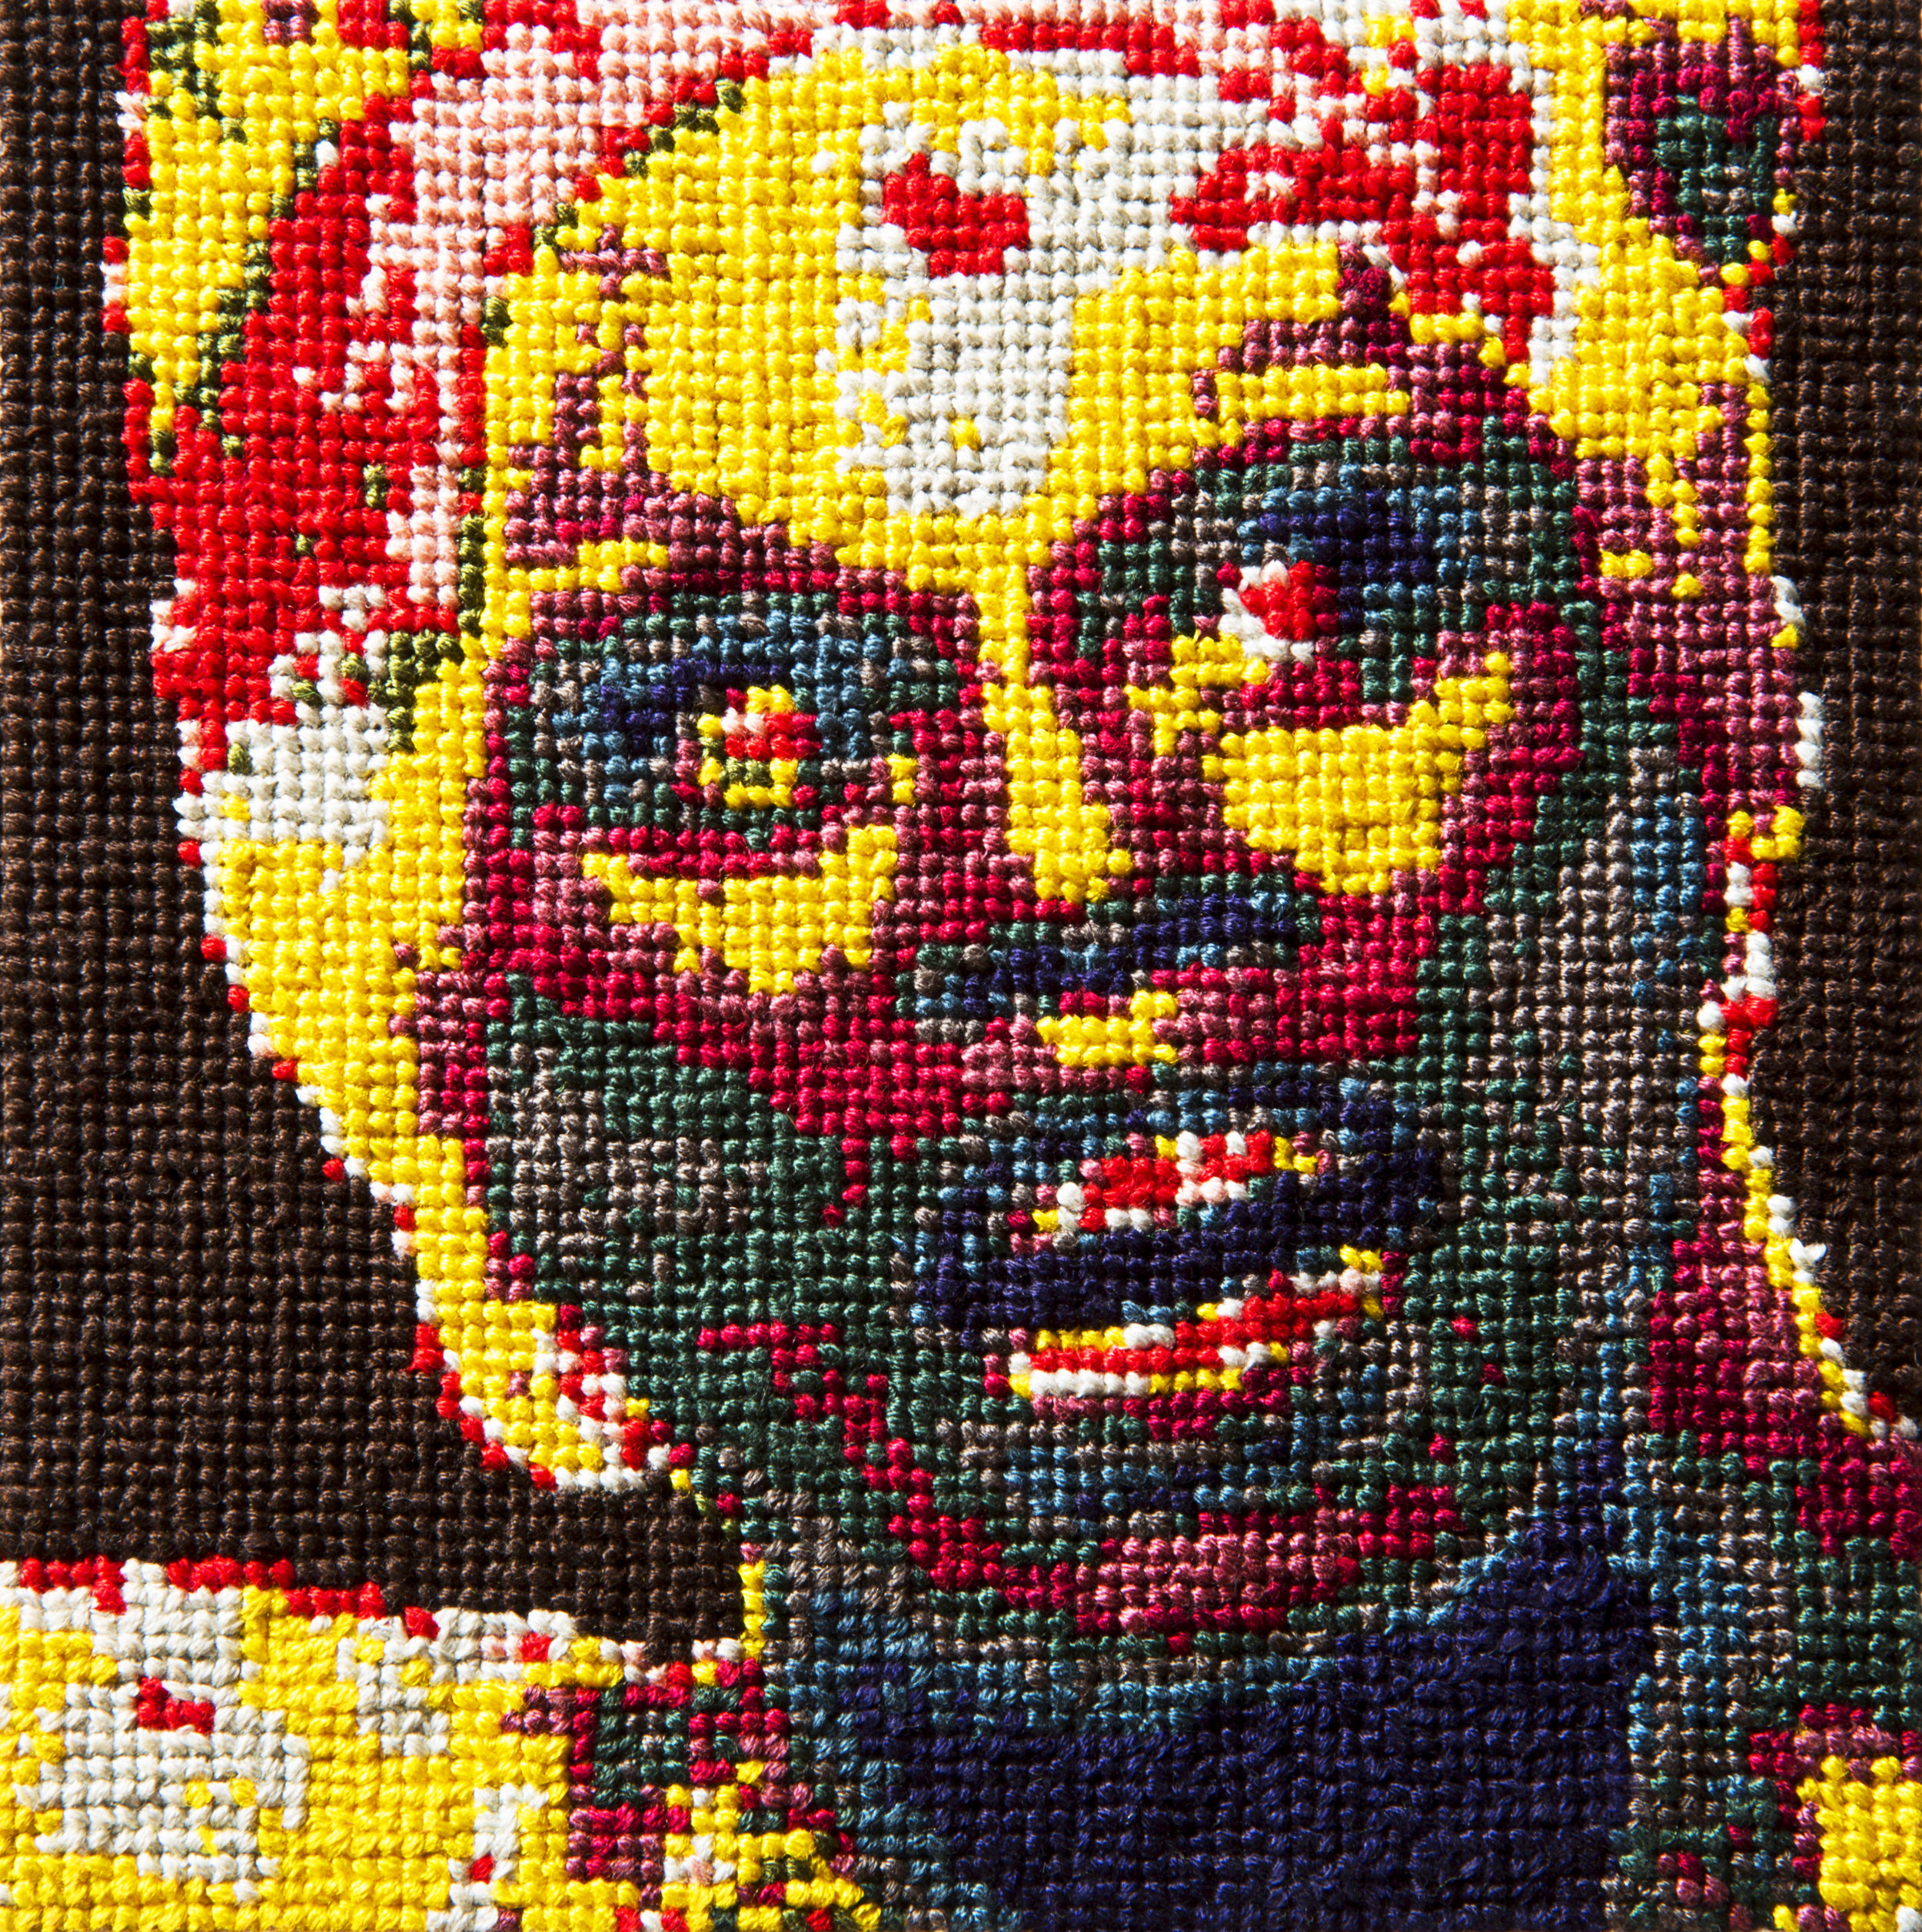   Frame 16   By Rachel Burnstein  5 x 5 inches  Cotton thread on aida cloth  2013 